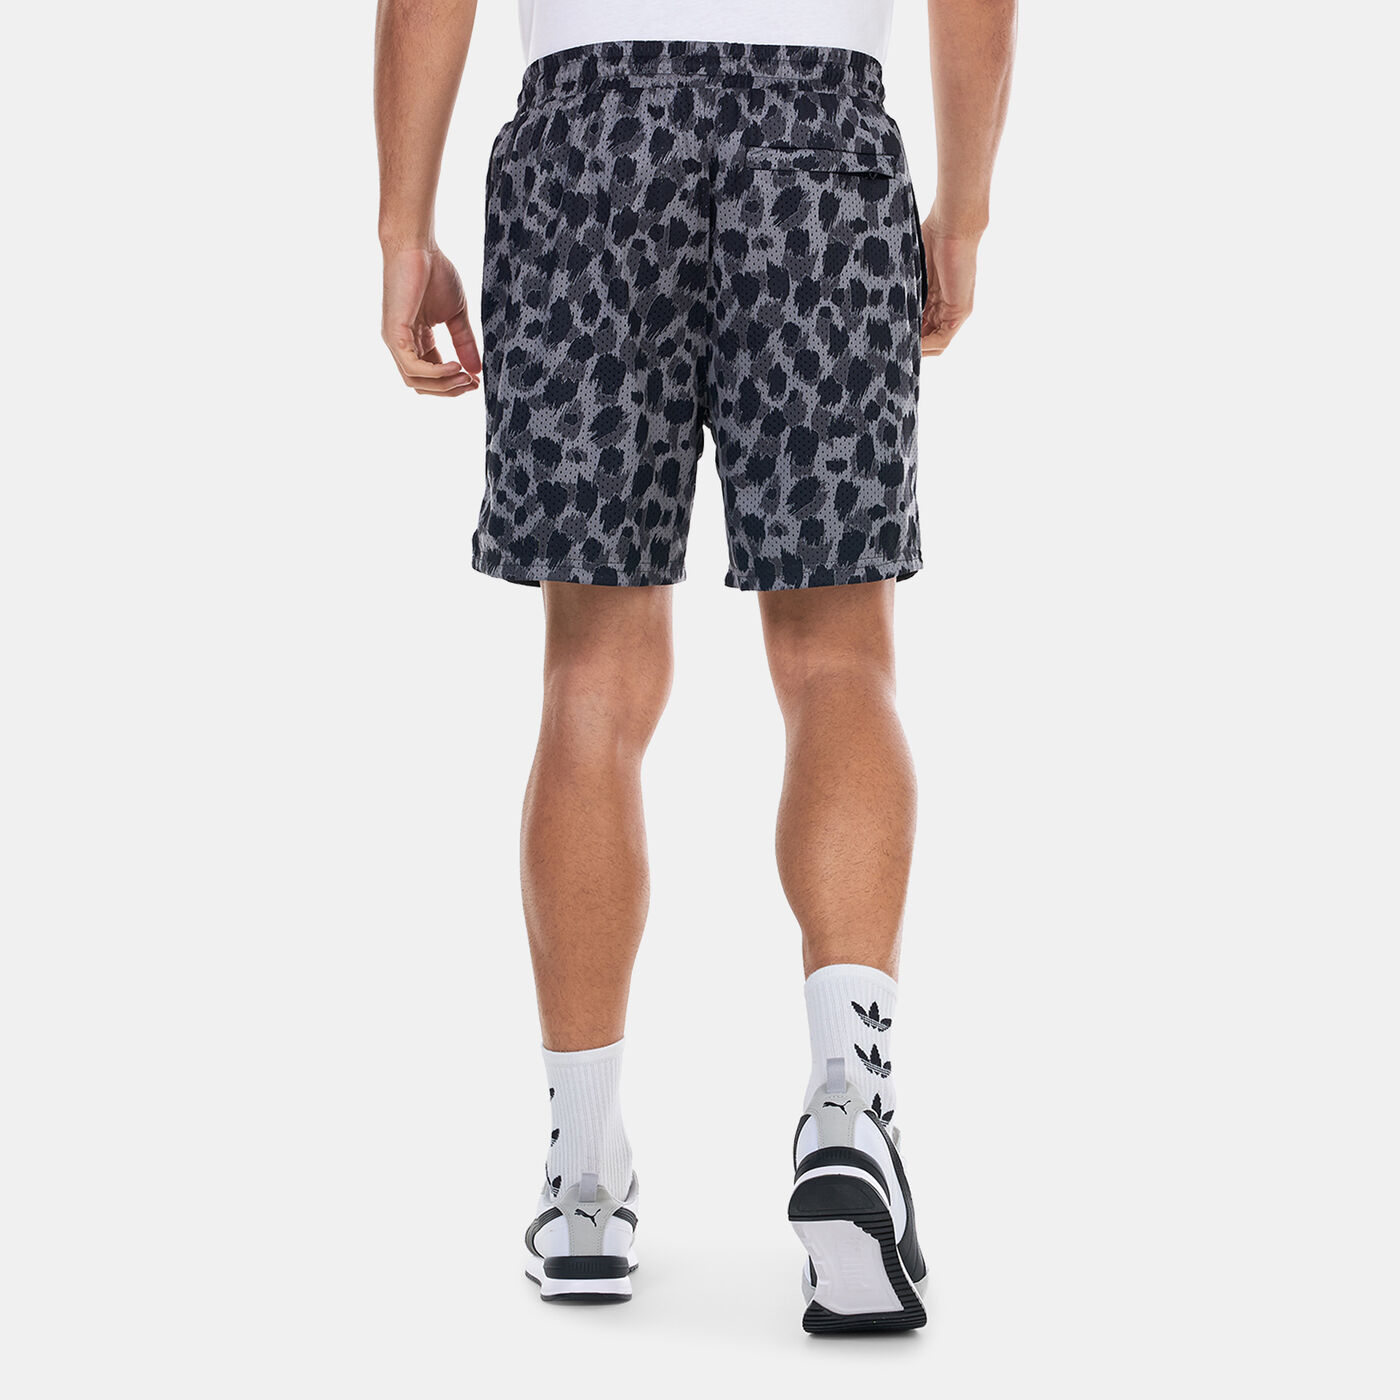 Men's UPTOWN Printed Shorts